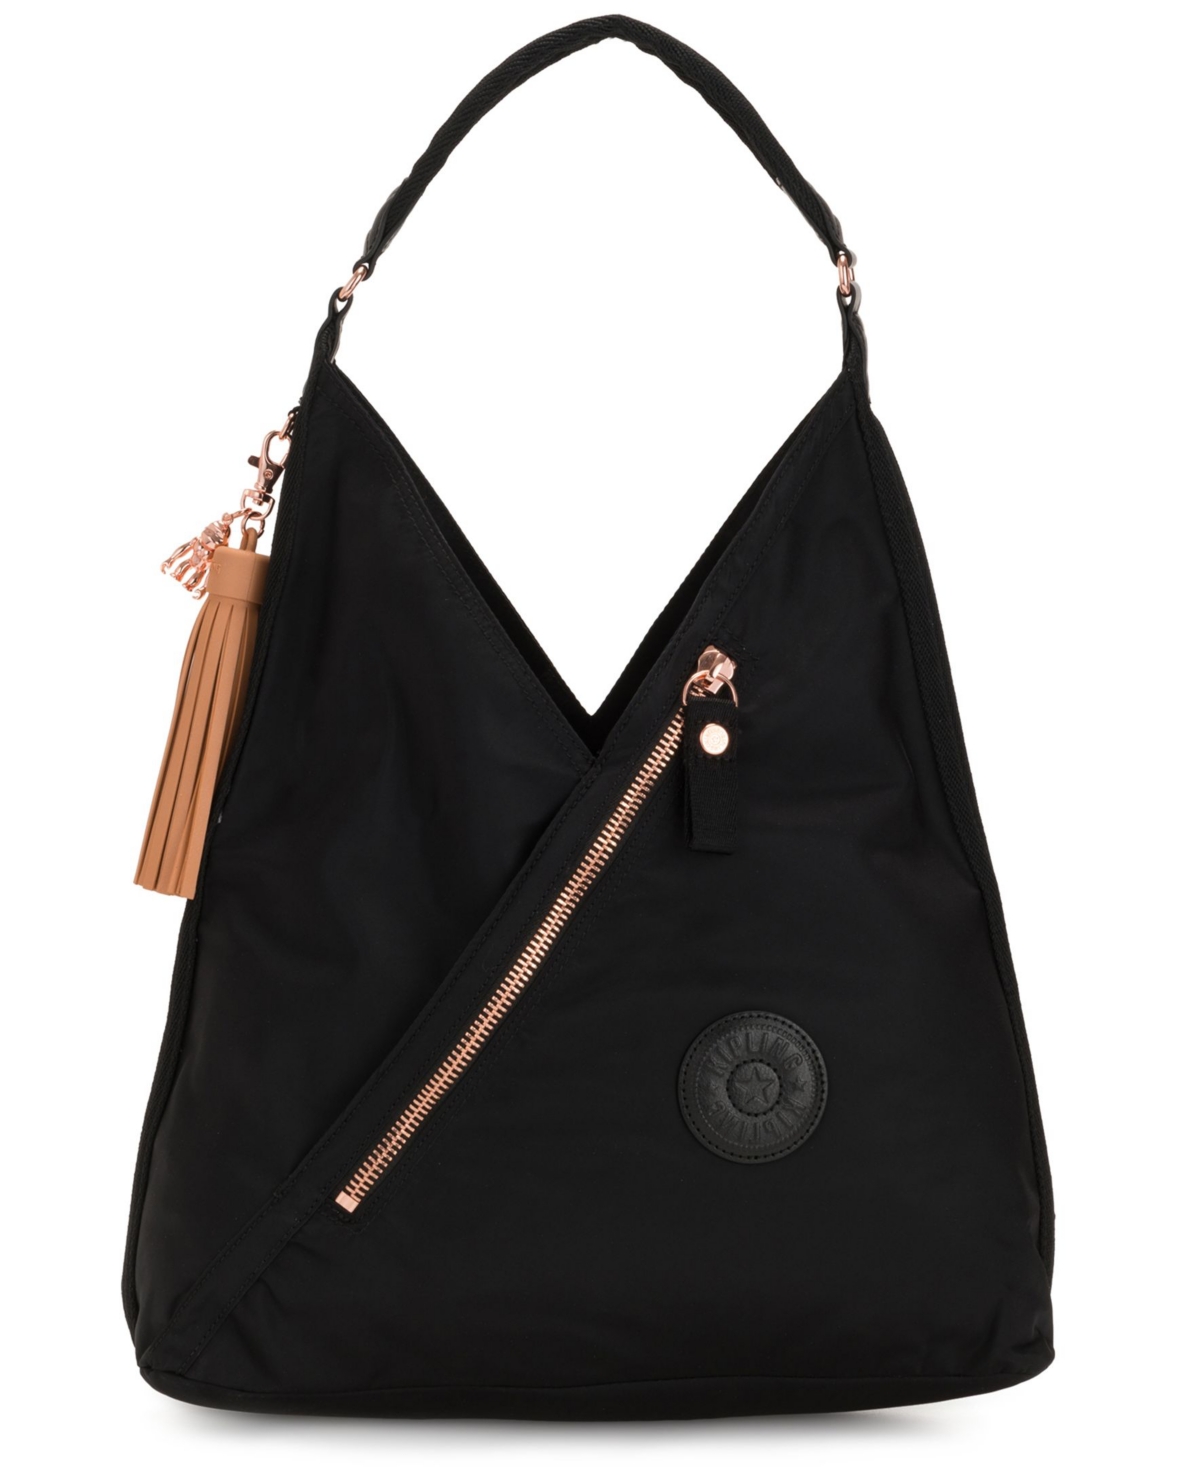 Net zo Vel Bedienen Kipling Olina Handbag & Reviews - Handbags & Accessories - Macy's